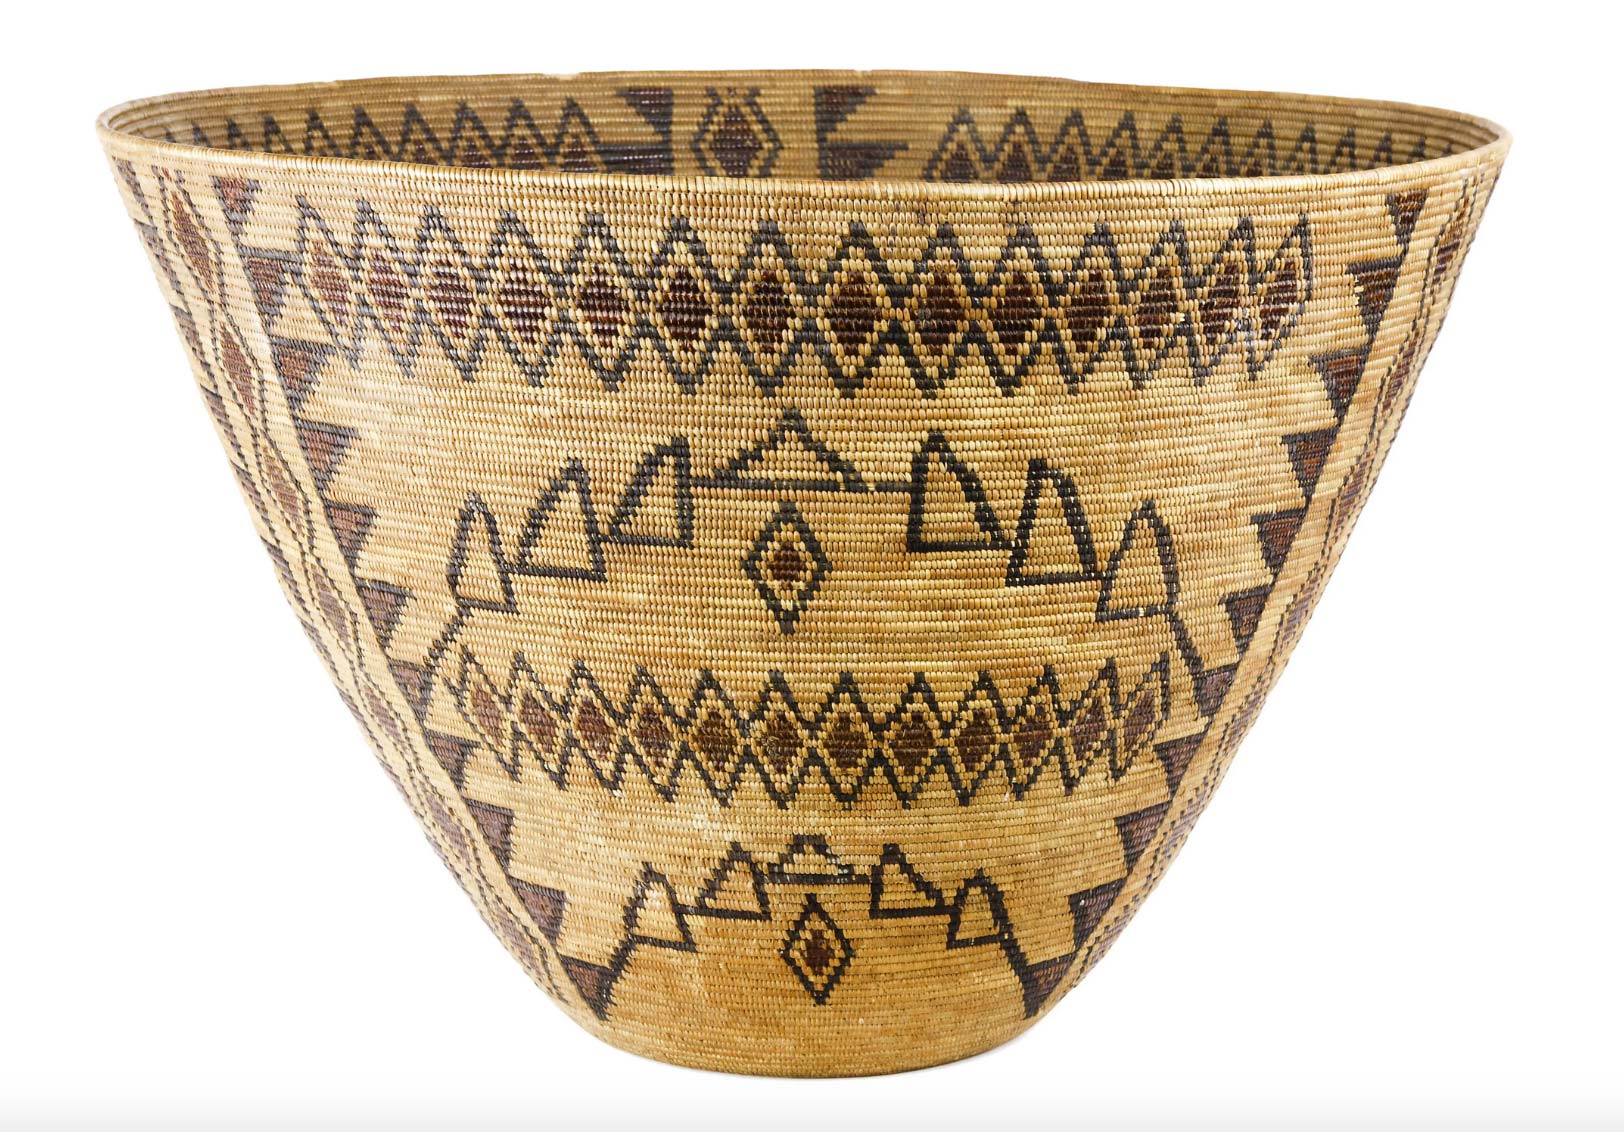 Yokuts polychrome decorated basket, estimate $10,000-12,000. Image courtesy Clars Auction Gallery